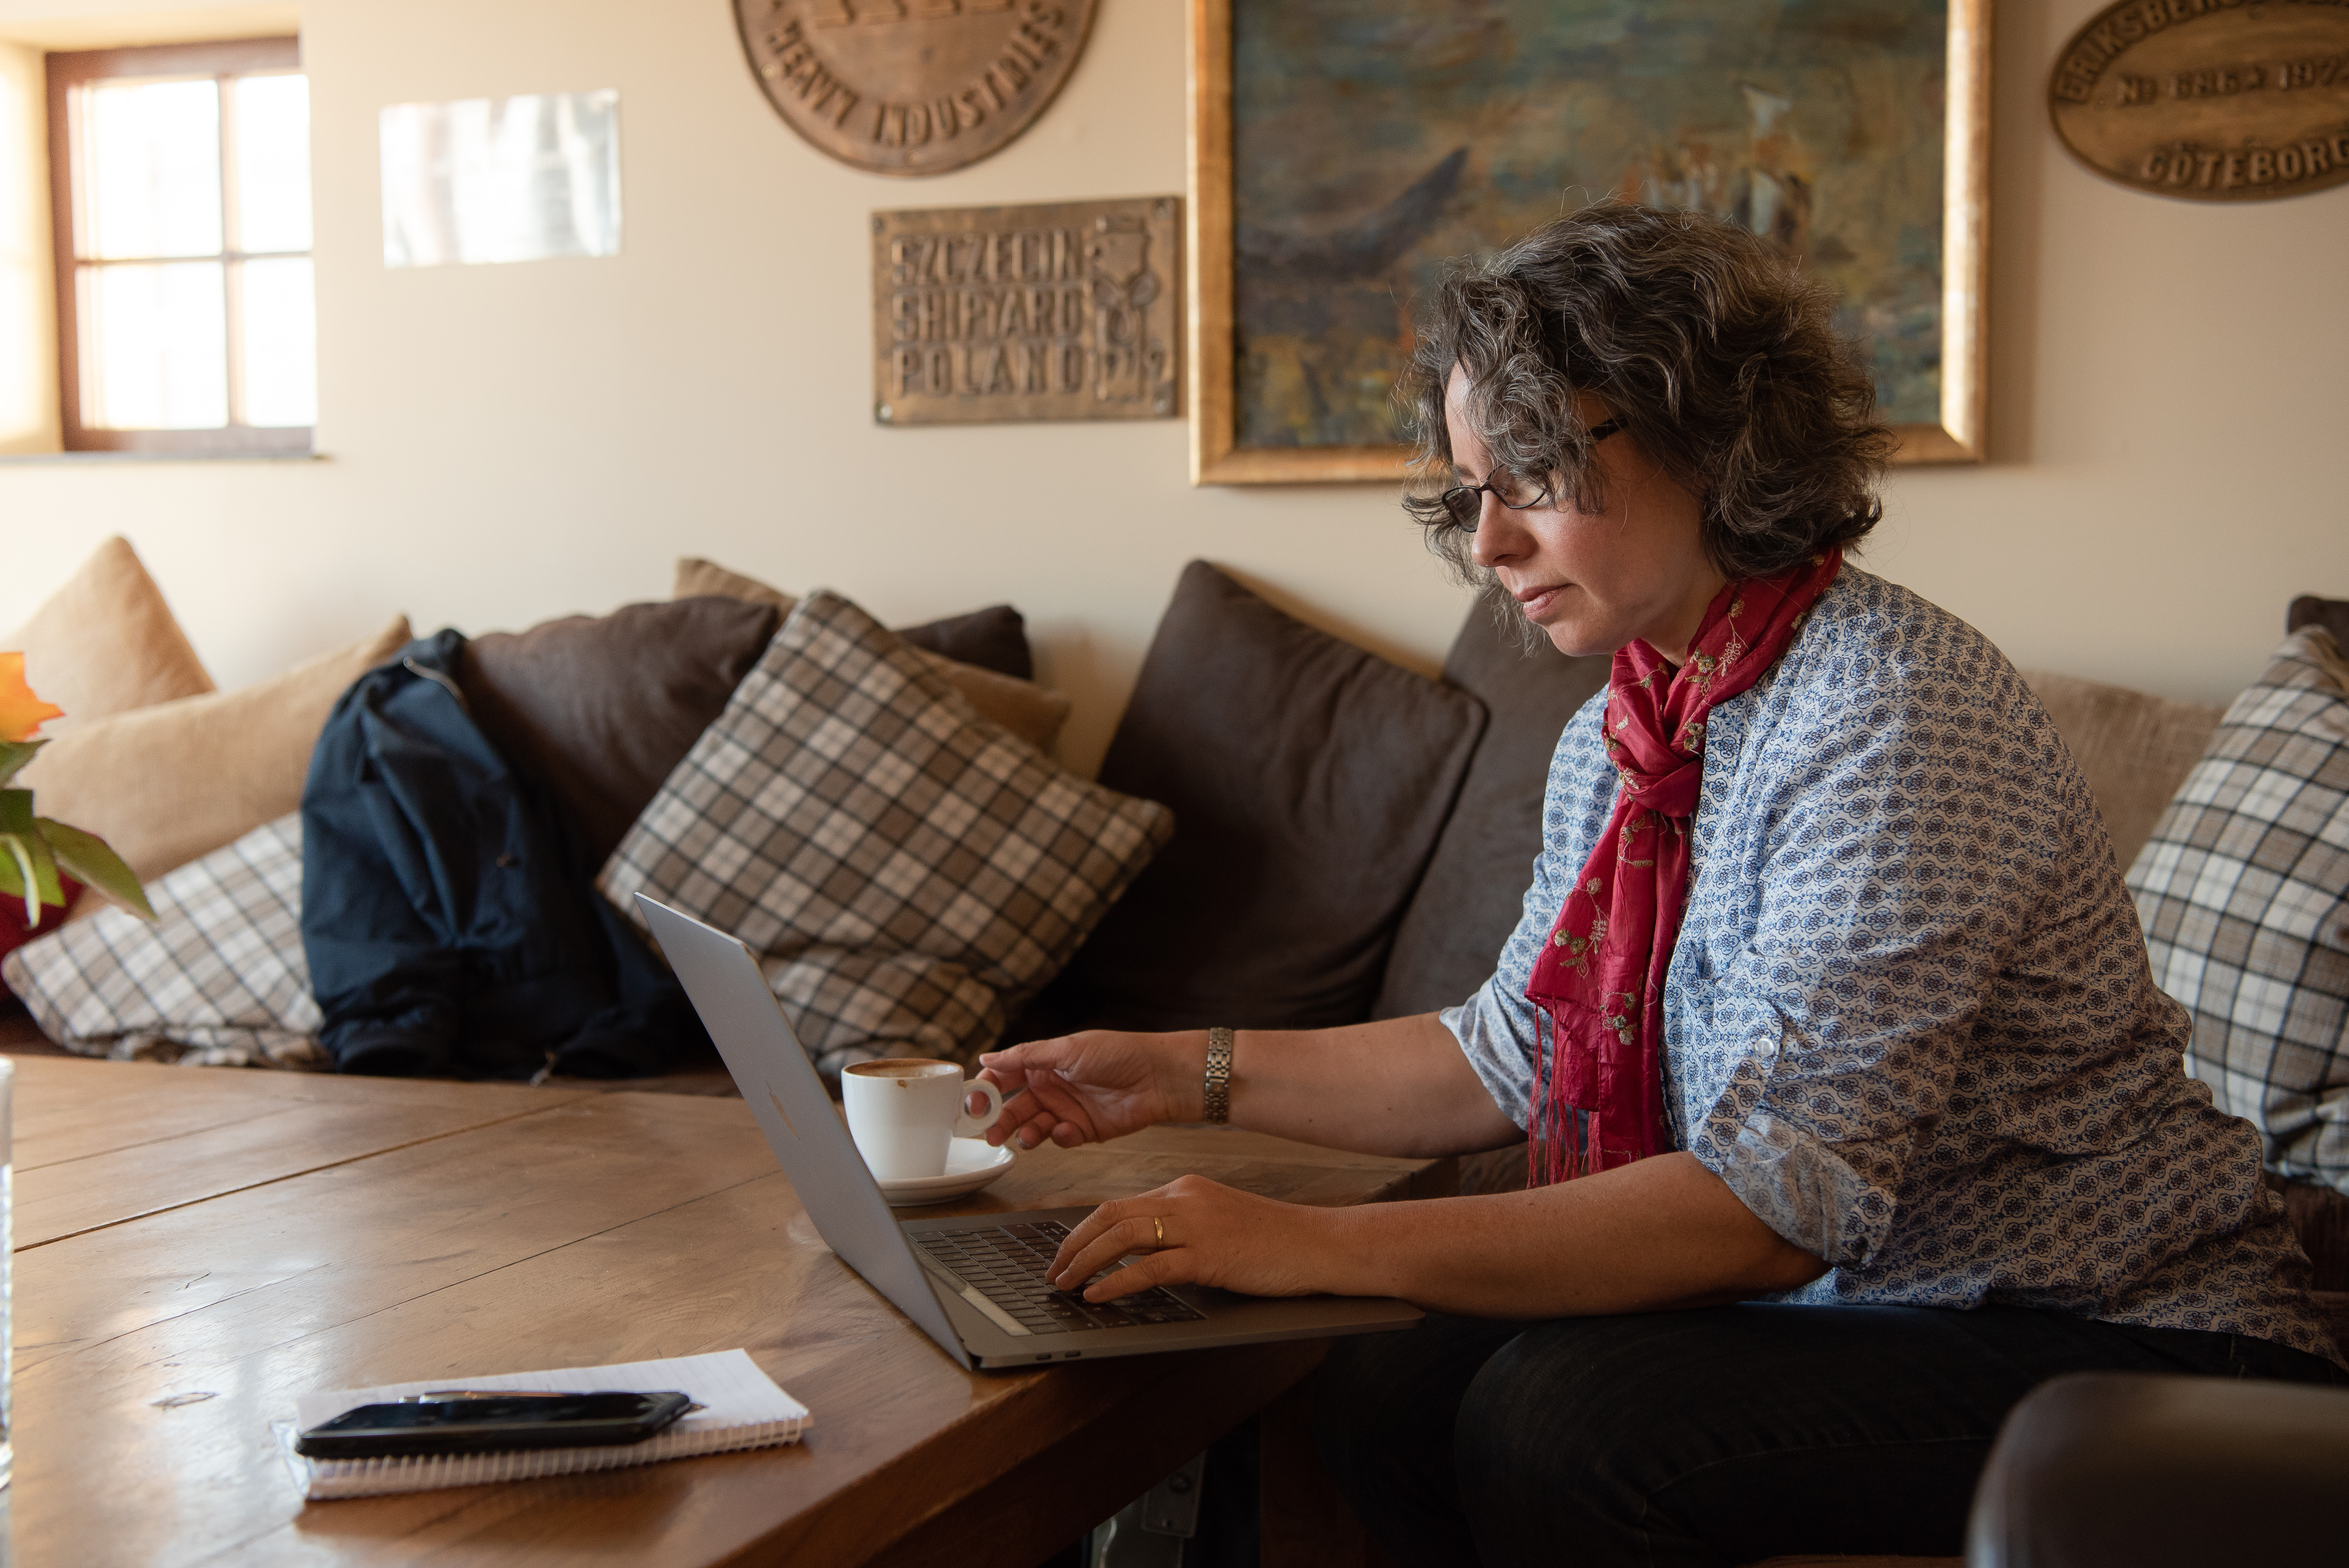 Personal Branding Photographer Edinburgh - woman working on laptop in cafe